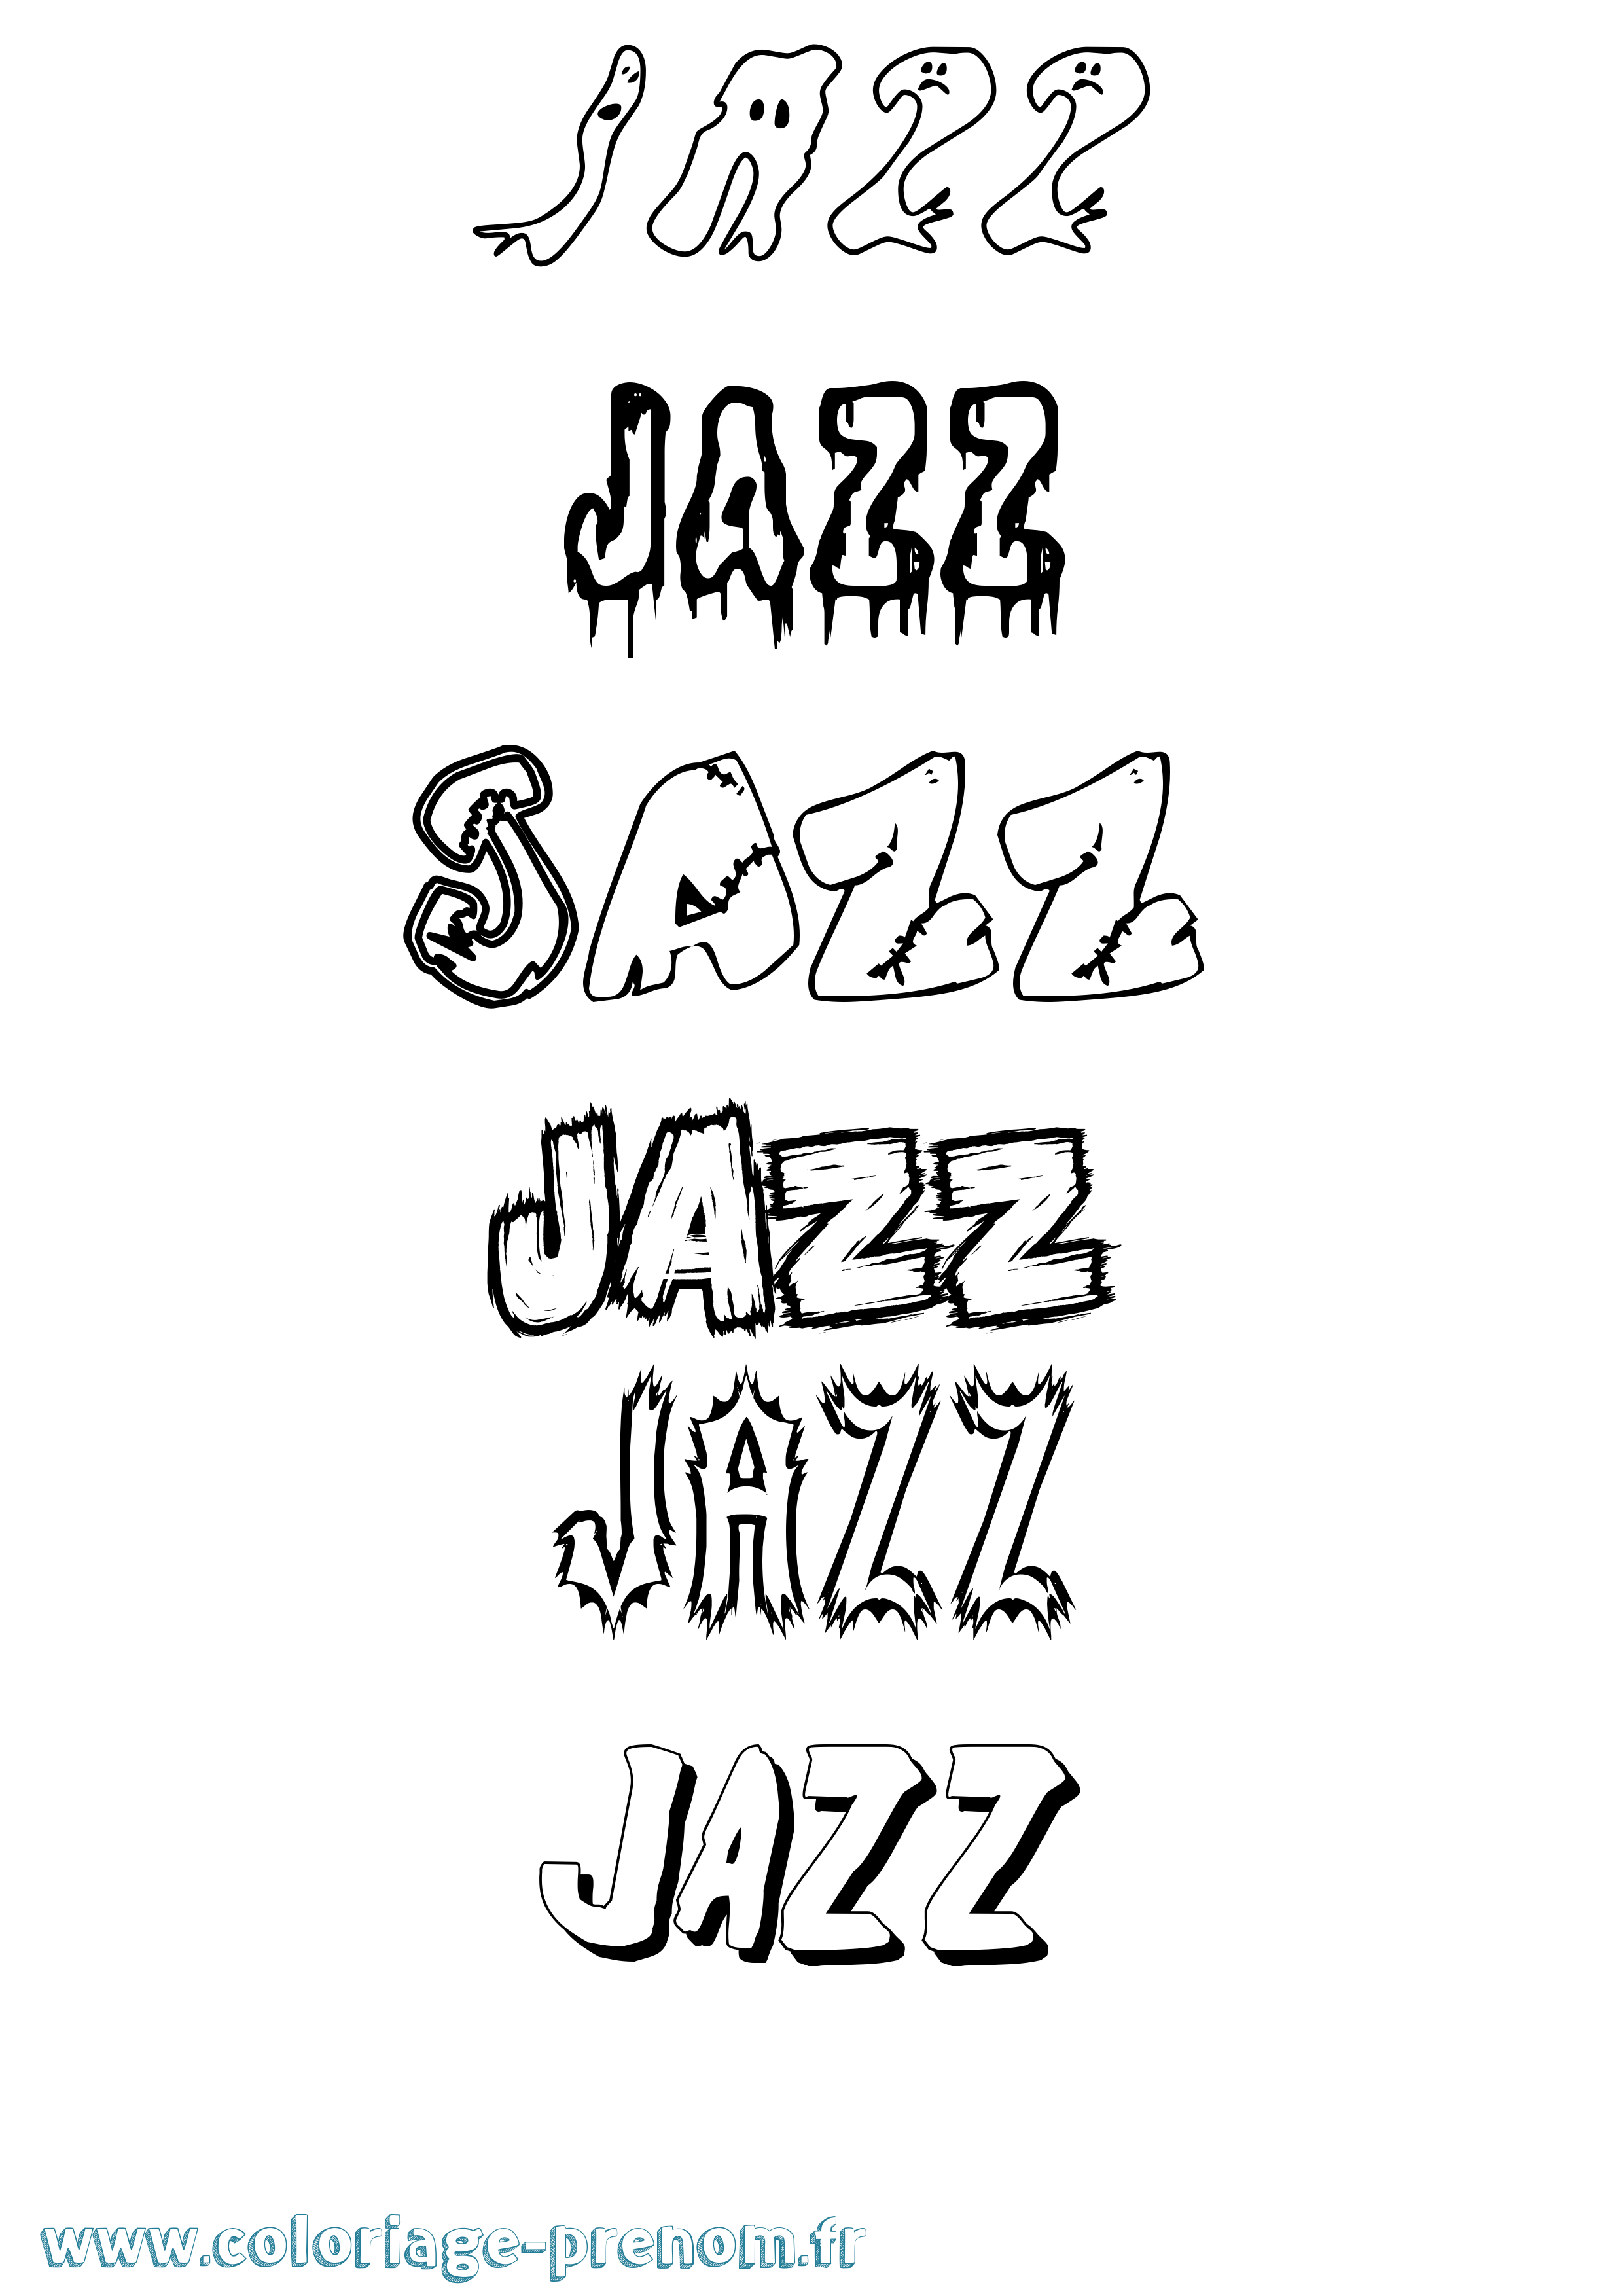 Coloriage prénom Jazz Frisson